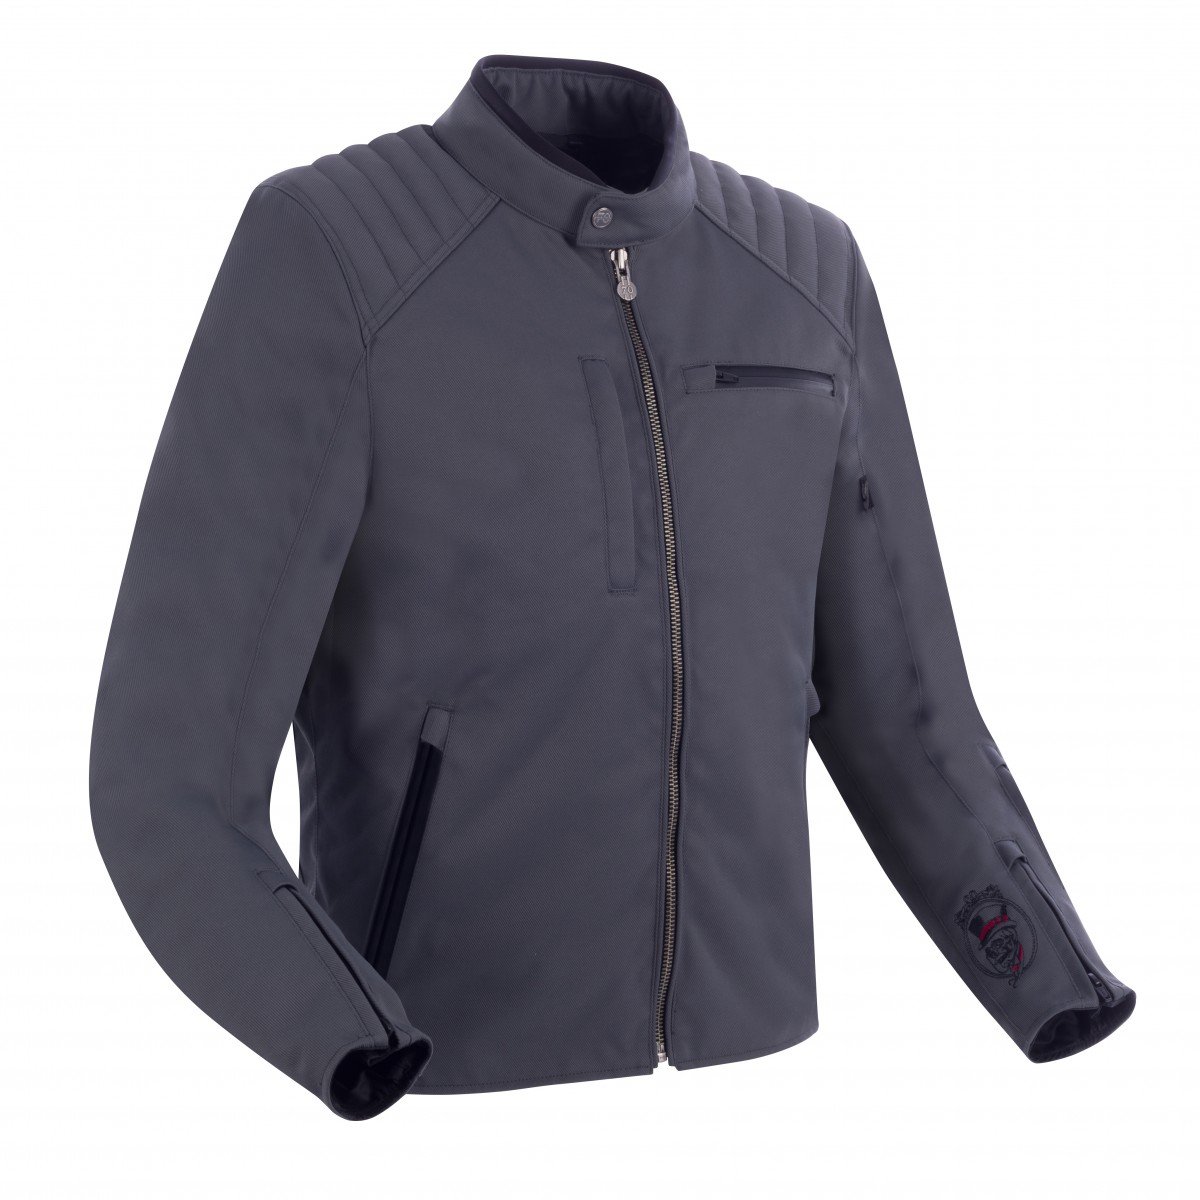 Image of Segura Eternal Jacket Gray Size L ID 3660815168622